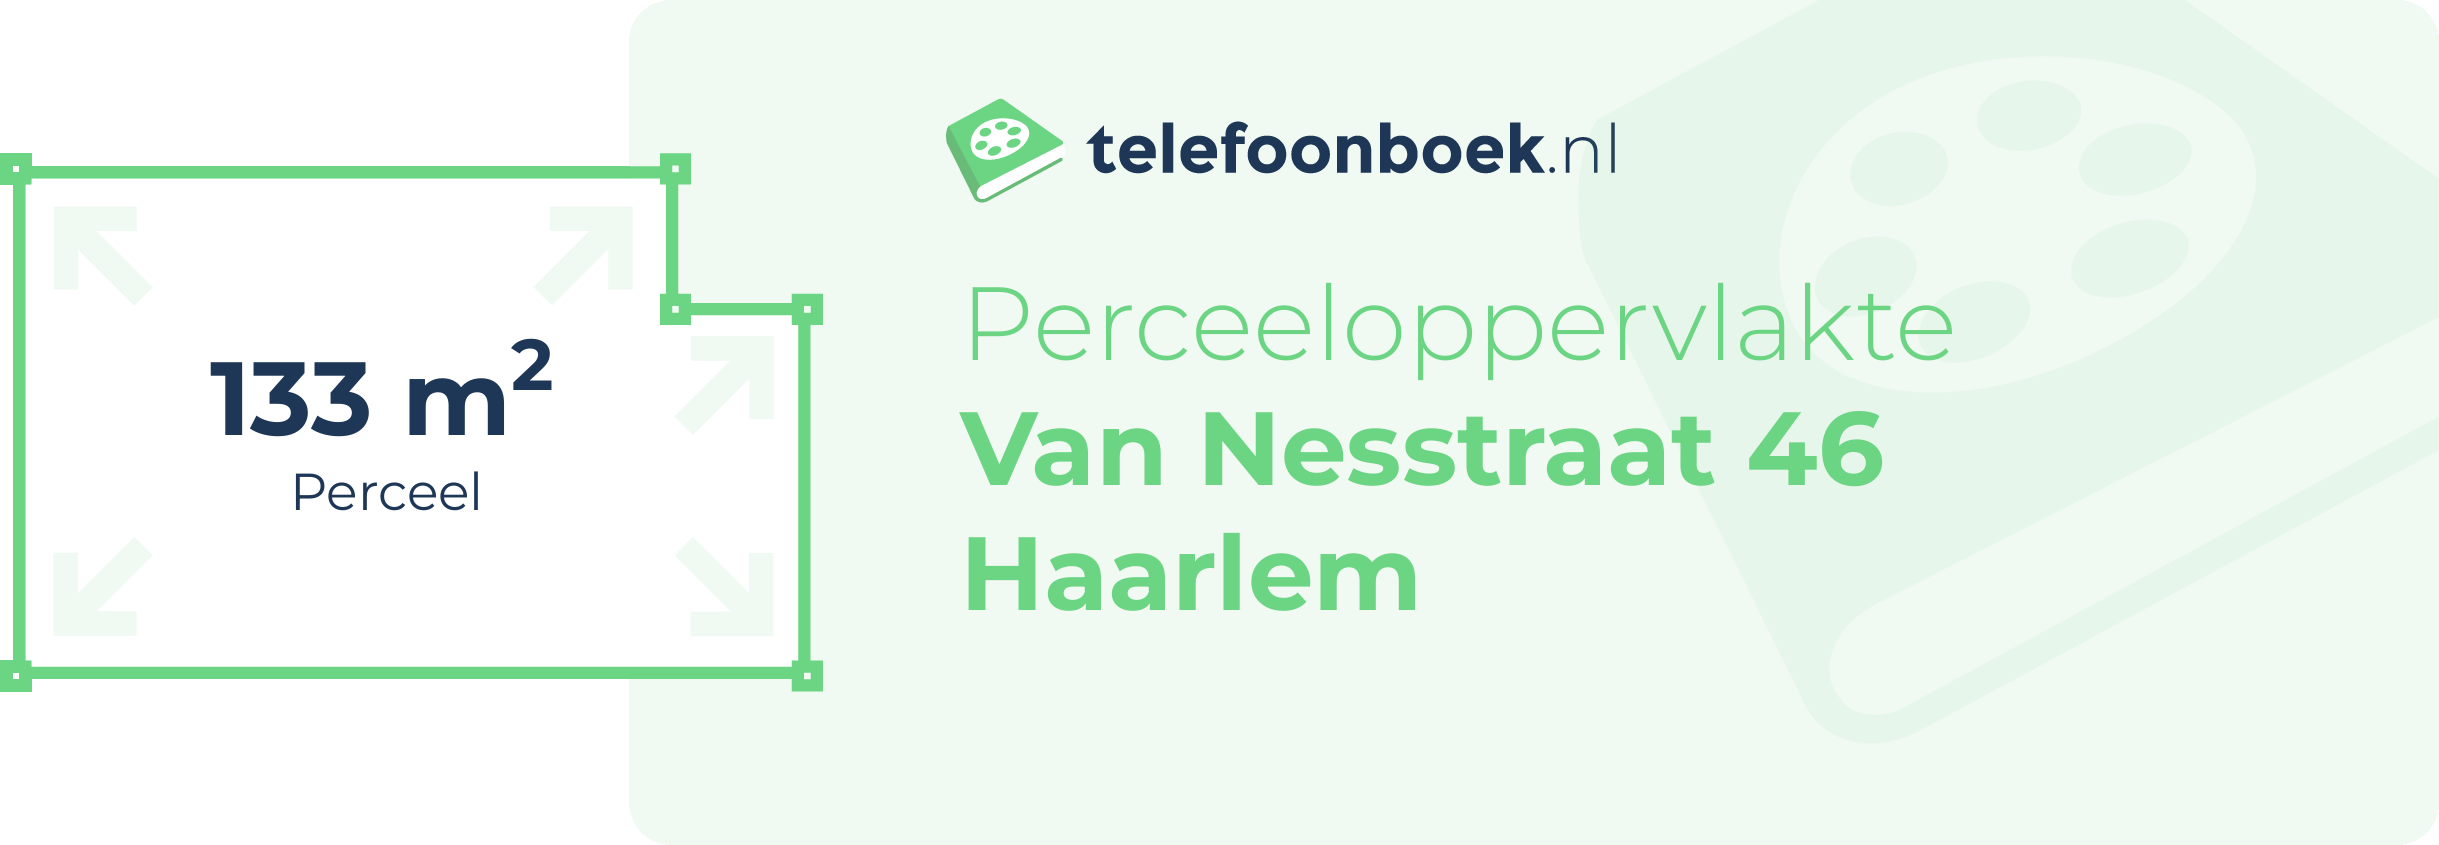 Perceeloppervlakte Van Nesstraat 46 Haarlem